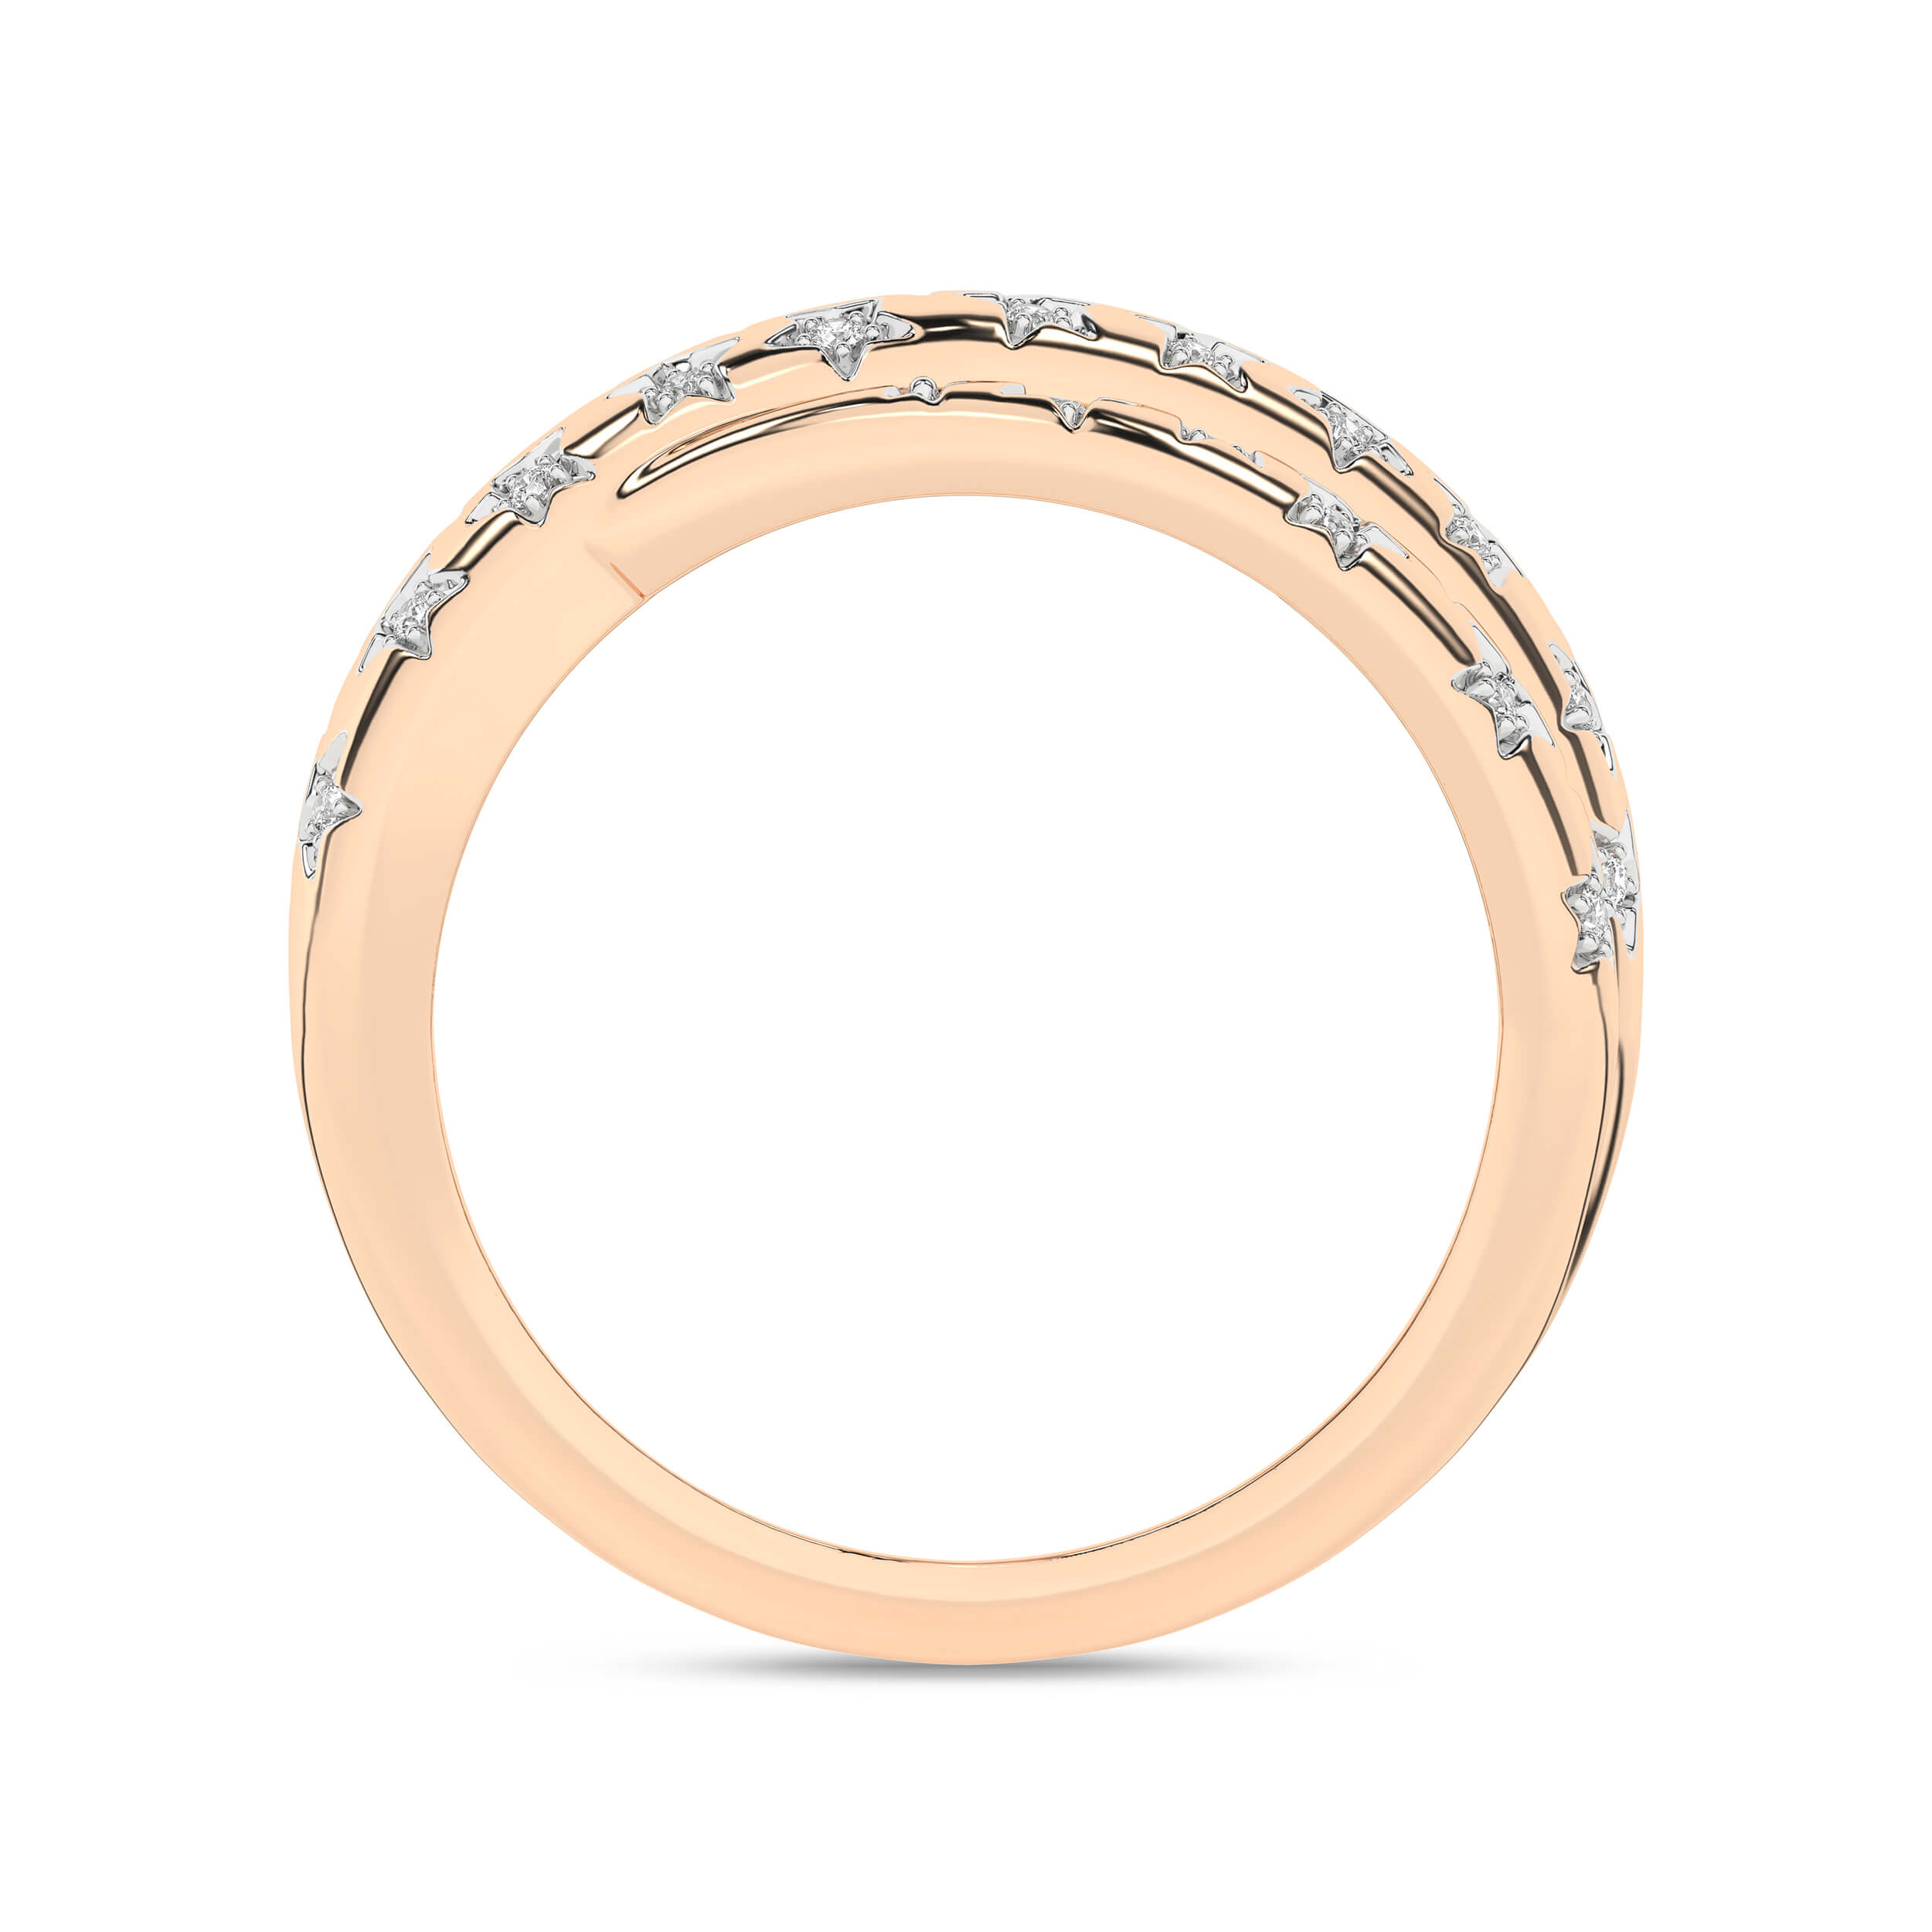 Inel din Aur Roz 14K cu Diamante, articol RF17770, previzualizare foto 2